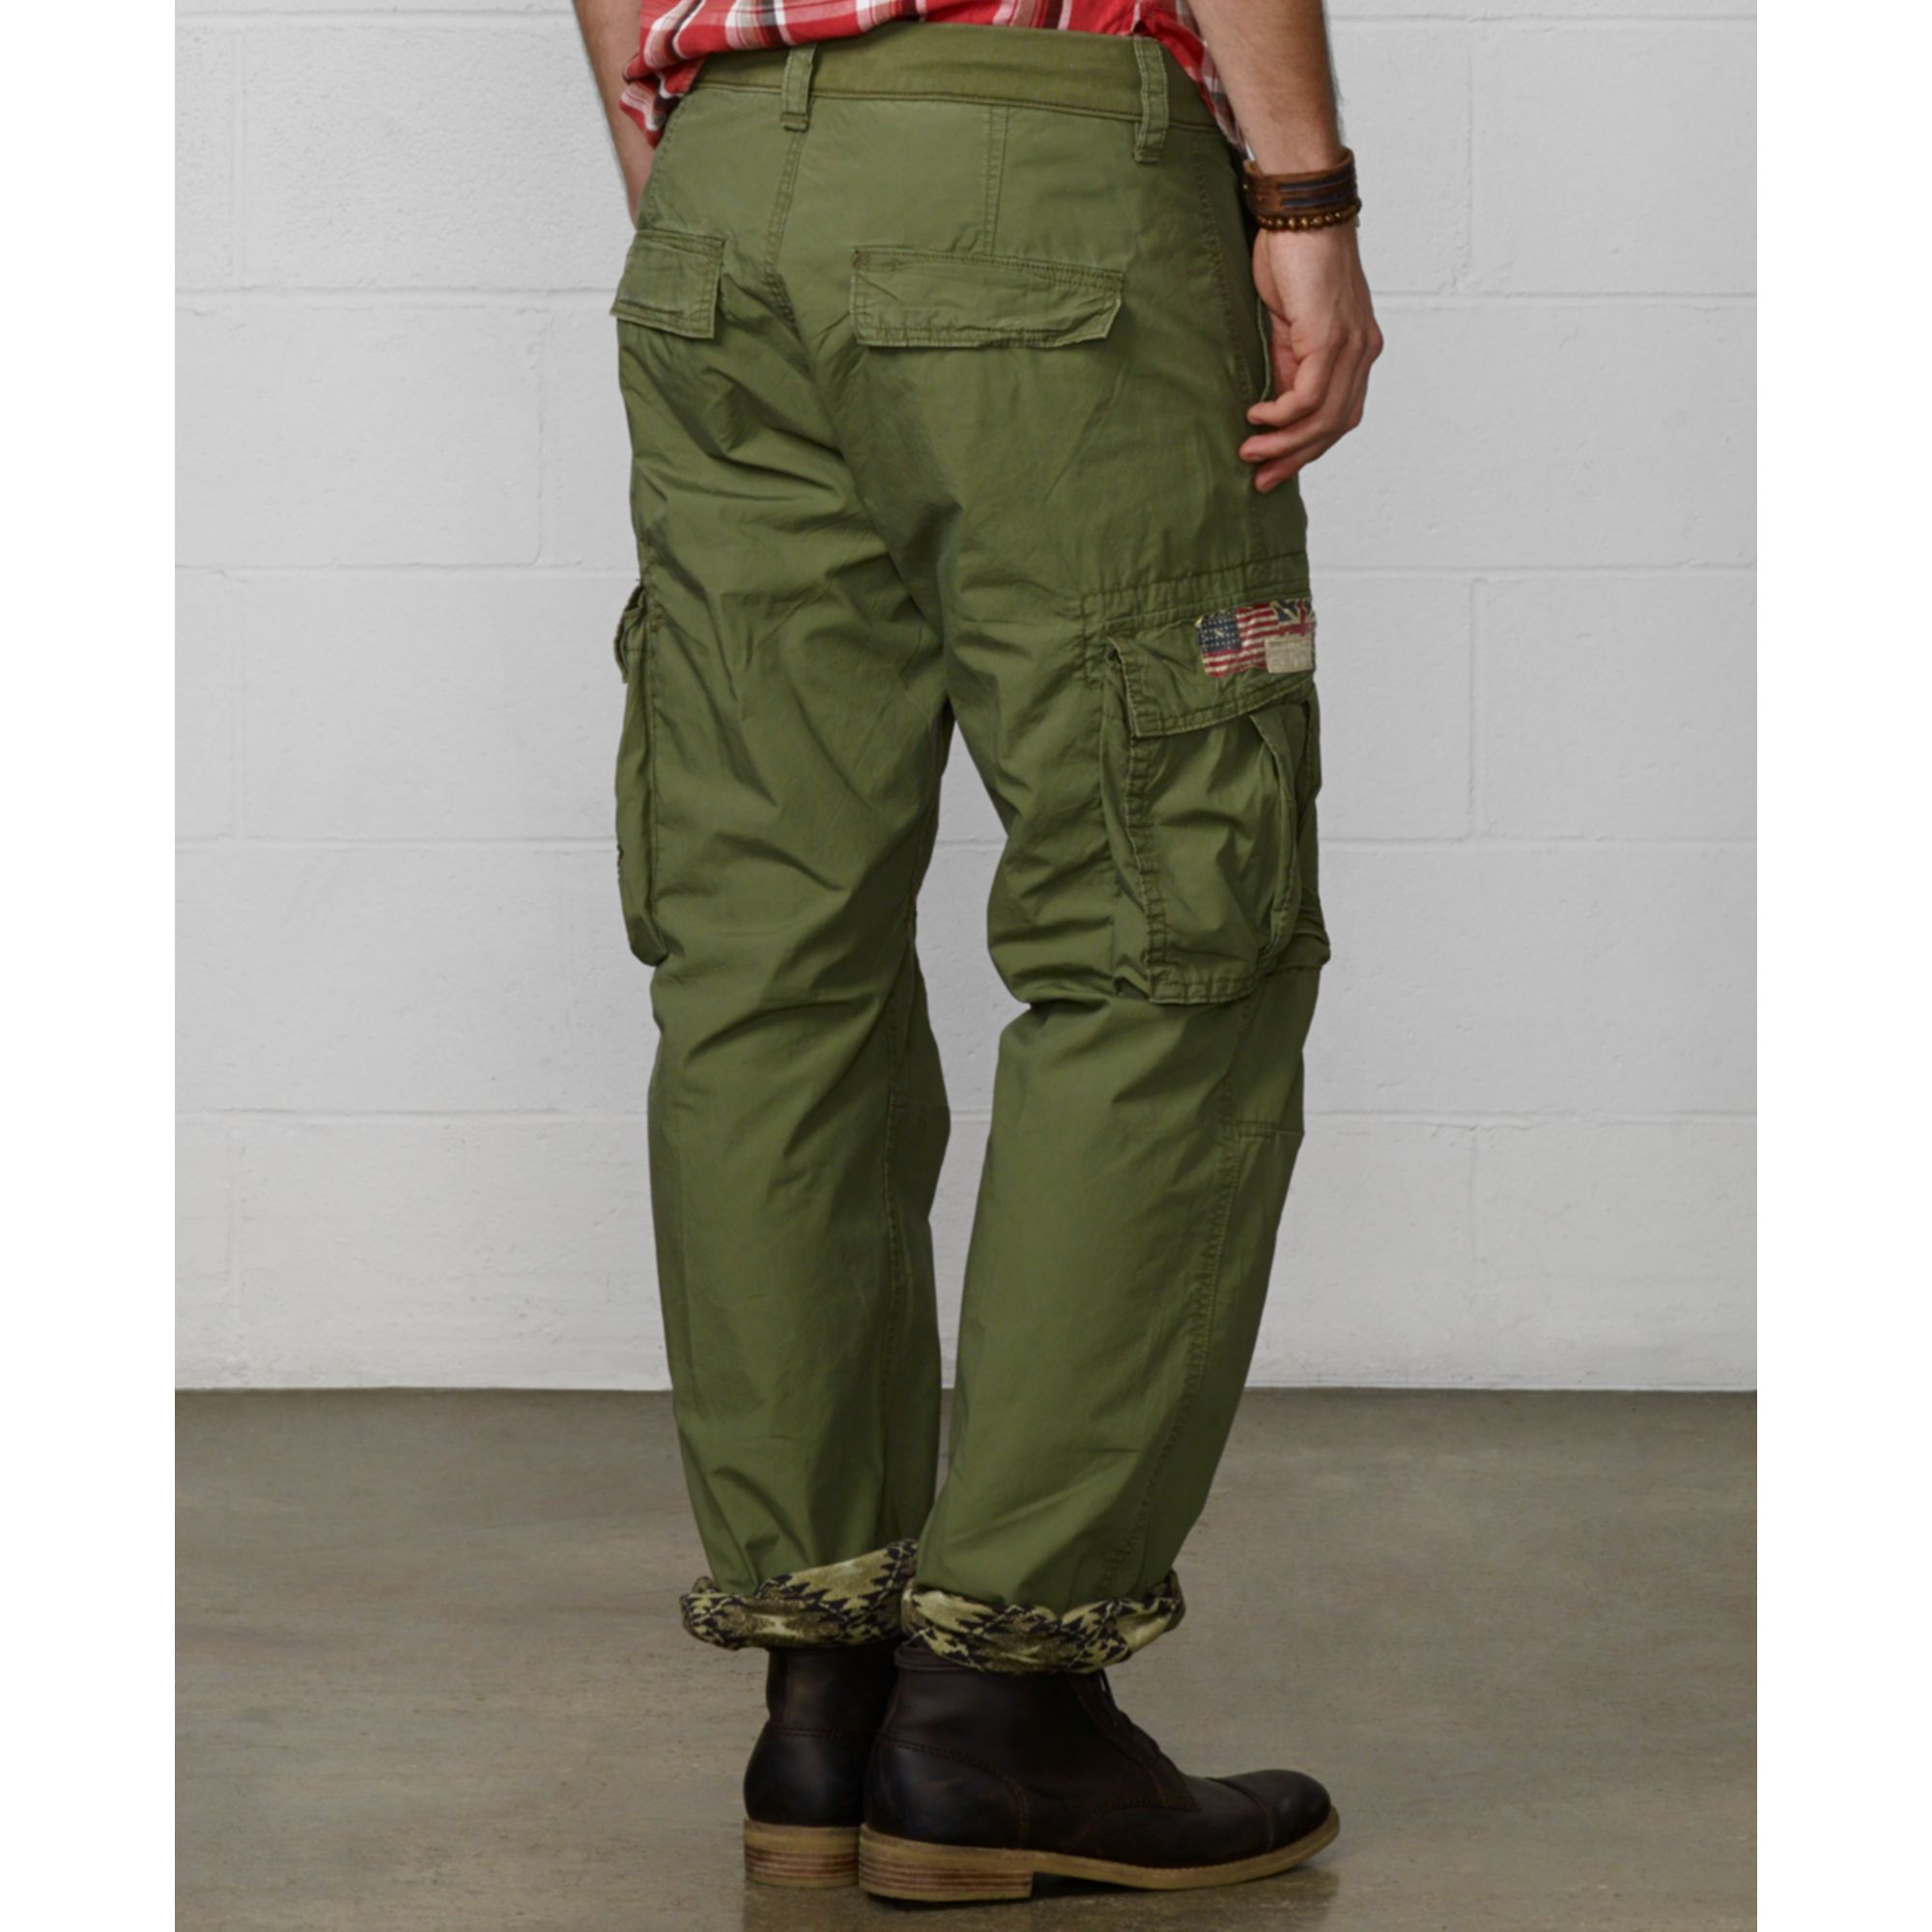 Lyst - Denim & Supply Ralph Lauren Slimfit Poplin Cargo Pants in Green ...